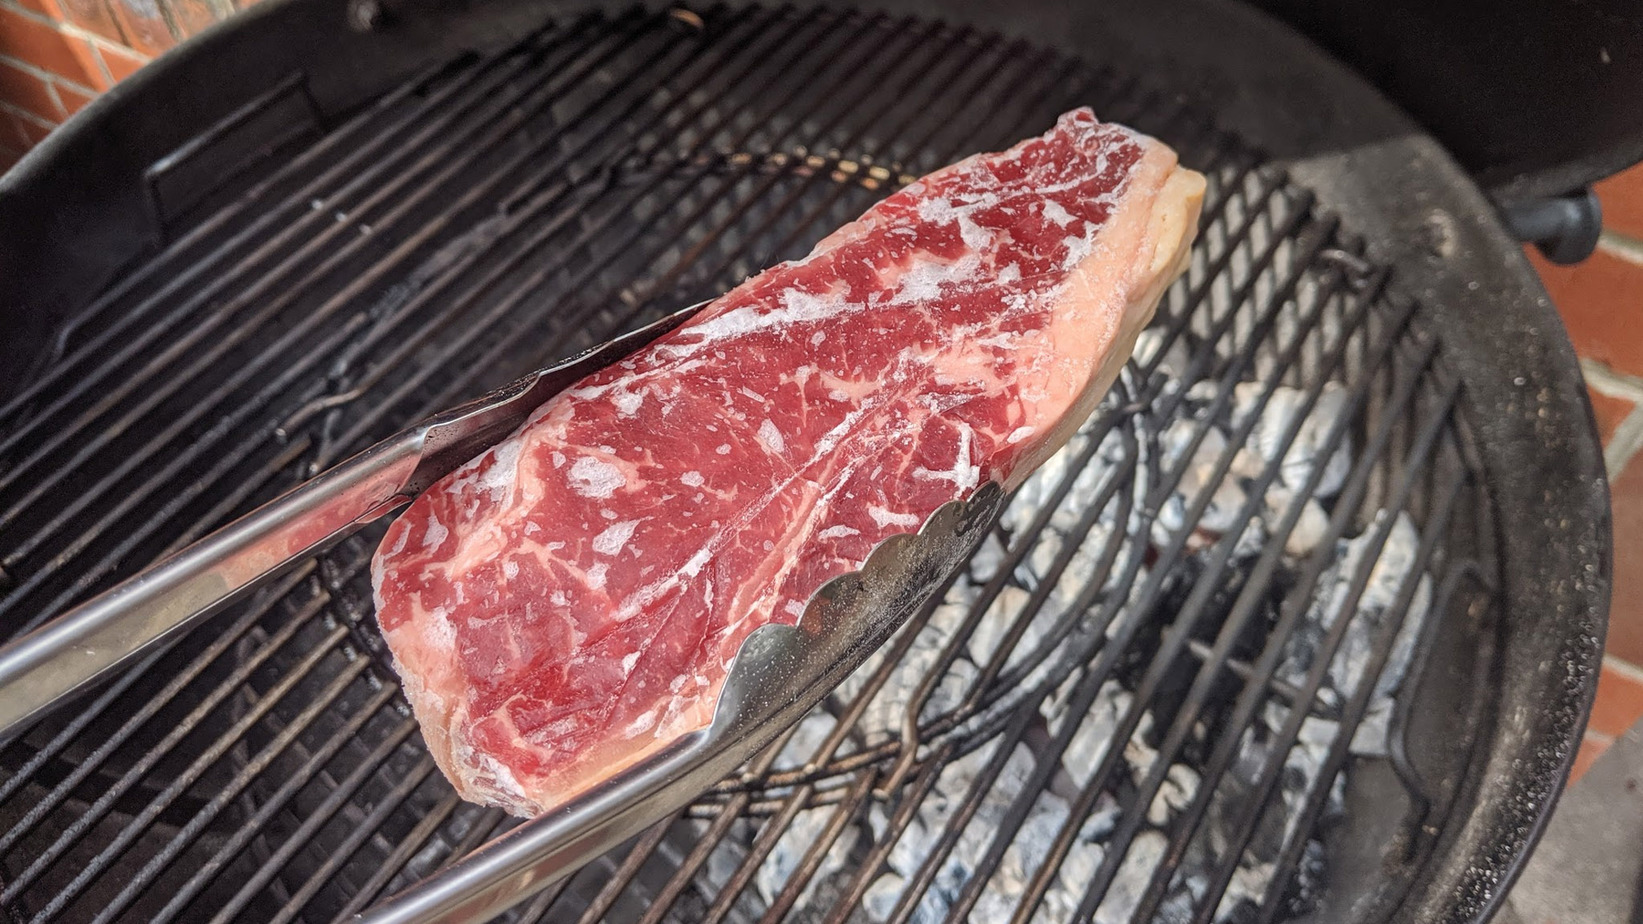 https://www.smokedbbqsource.com/wp-content/uploads/2019/09/how-to-grill-frozen-steaks.jpg